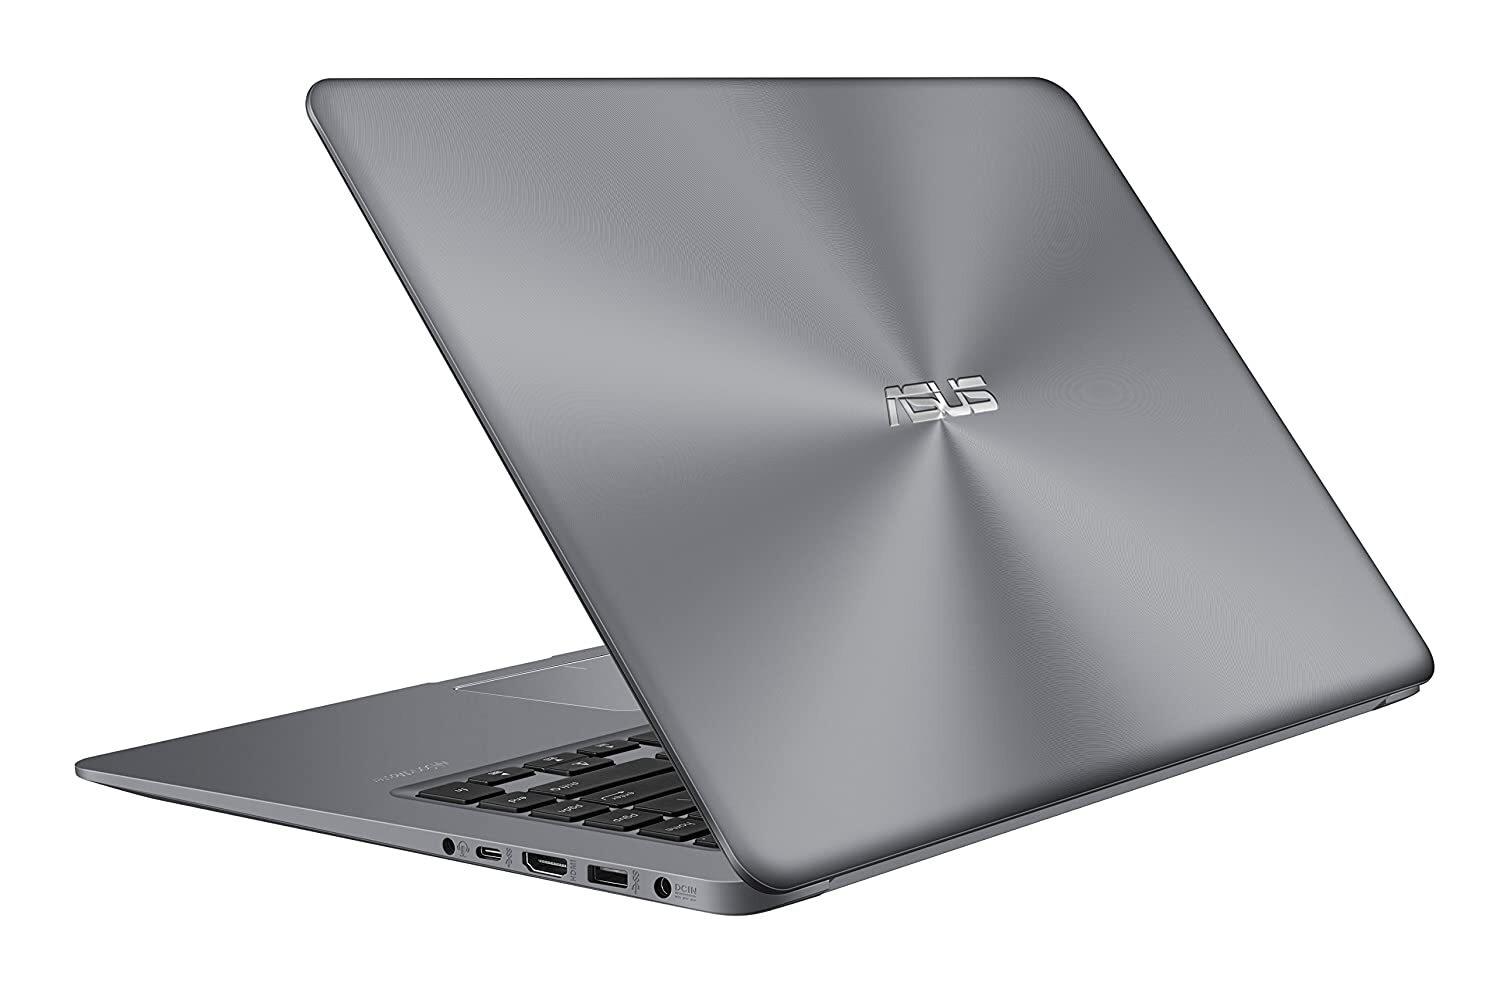 Asus VivoBook 15 X510UN Intel Core i7 8th Gen 15.6-inch FHD Thin & Light Laptop (8GB RAM/1TB HDD/Windows 10/2GB NVIDIA GeForce MX150 Graphics/Grey/Gold/1.70 Kg), X510UN-EJ329T-M000000000326 www.mysocially.com